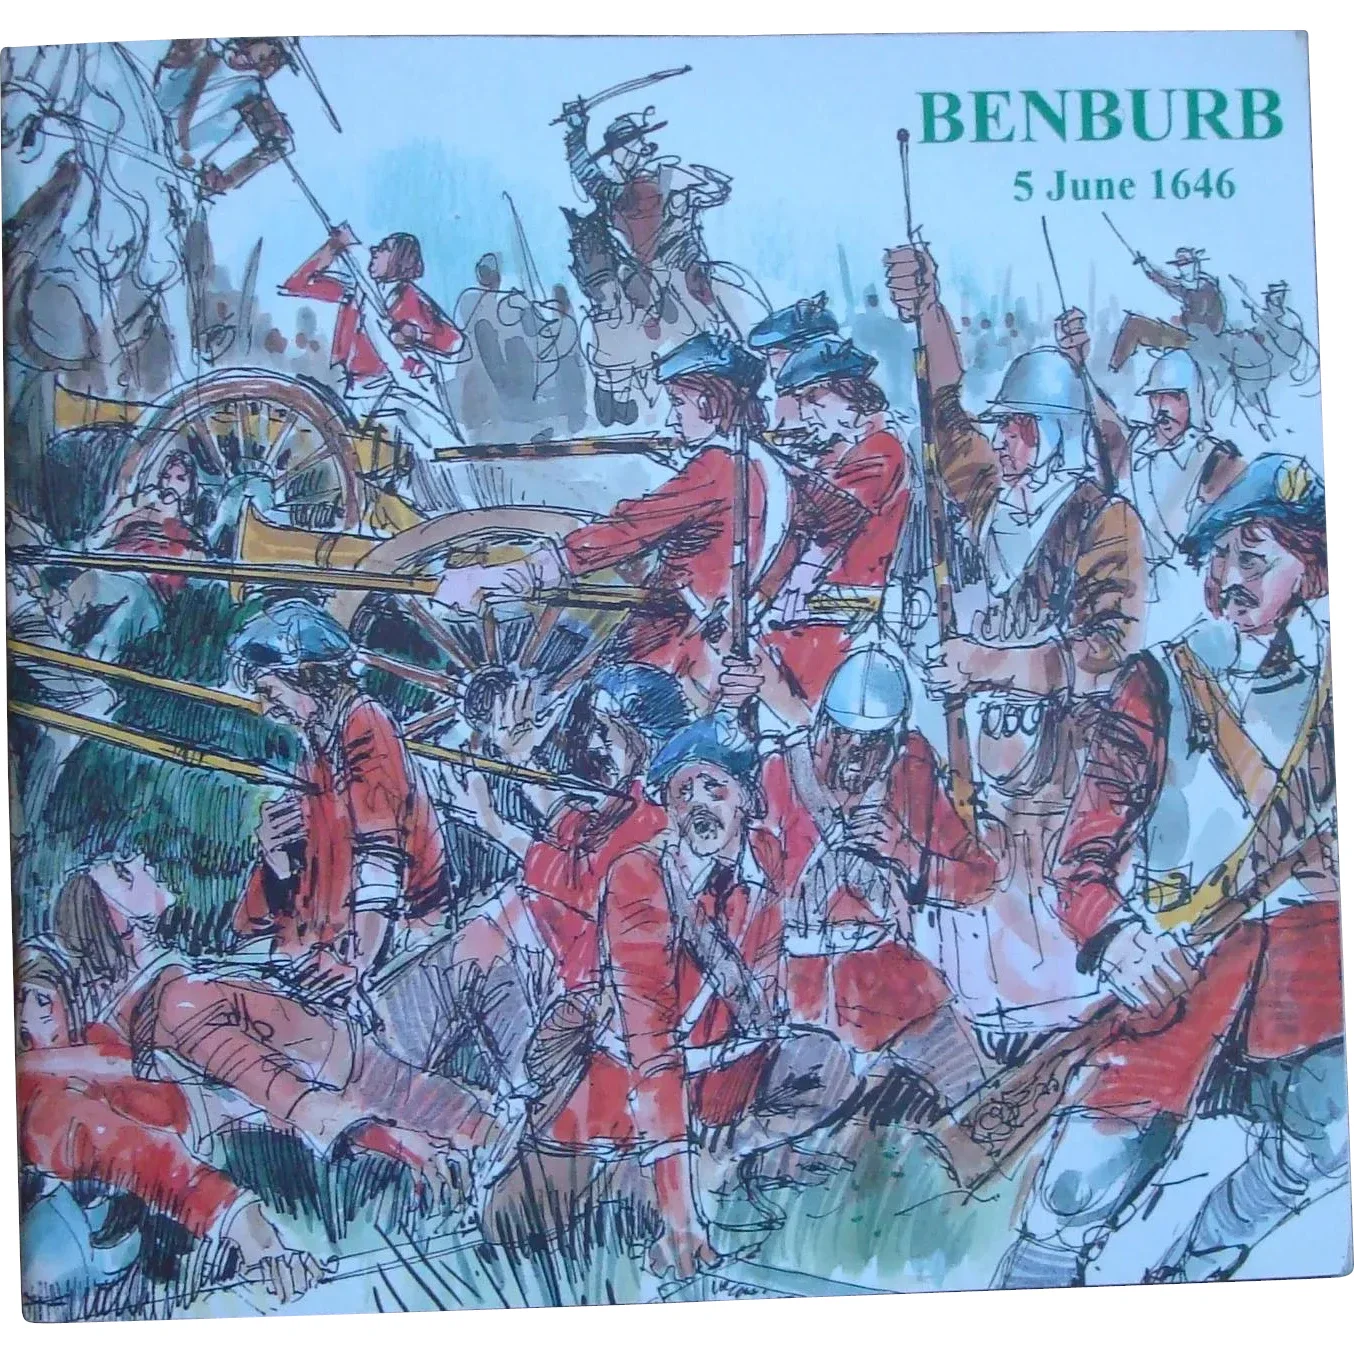 Benburb-5-June-1646-Battle-Benburb